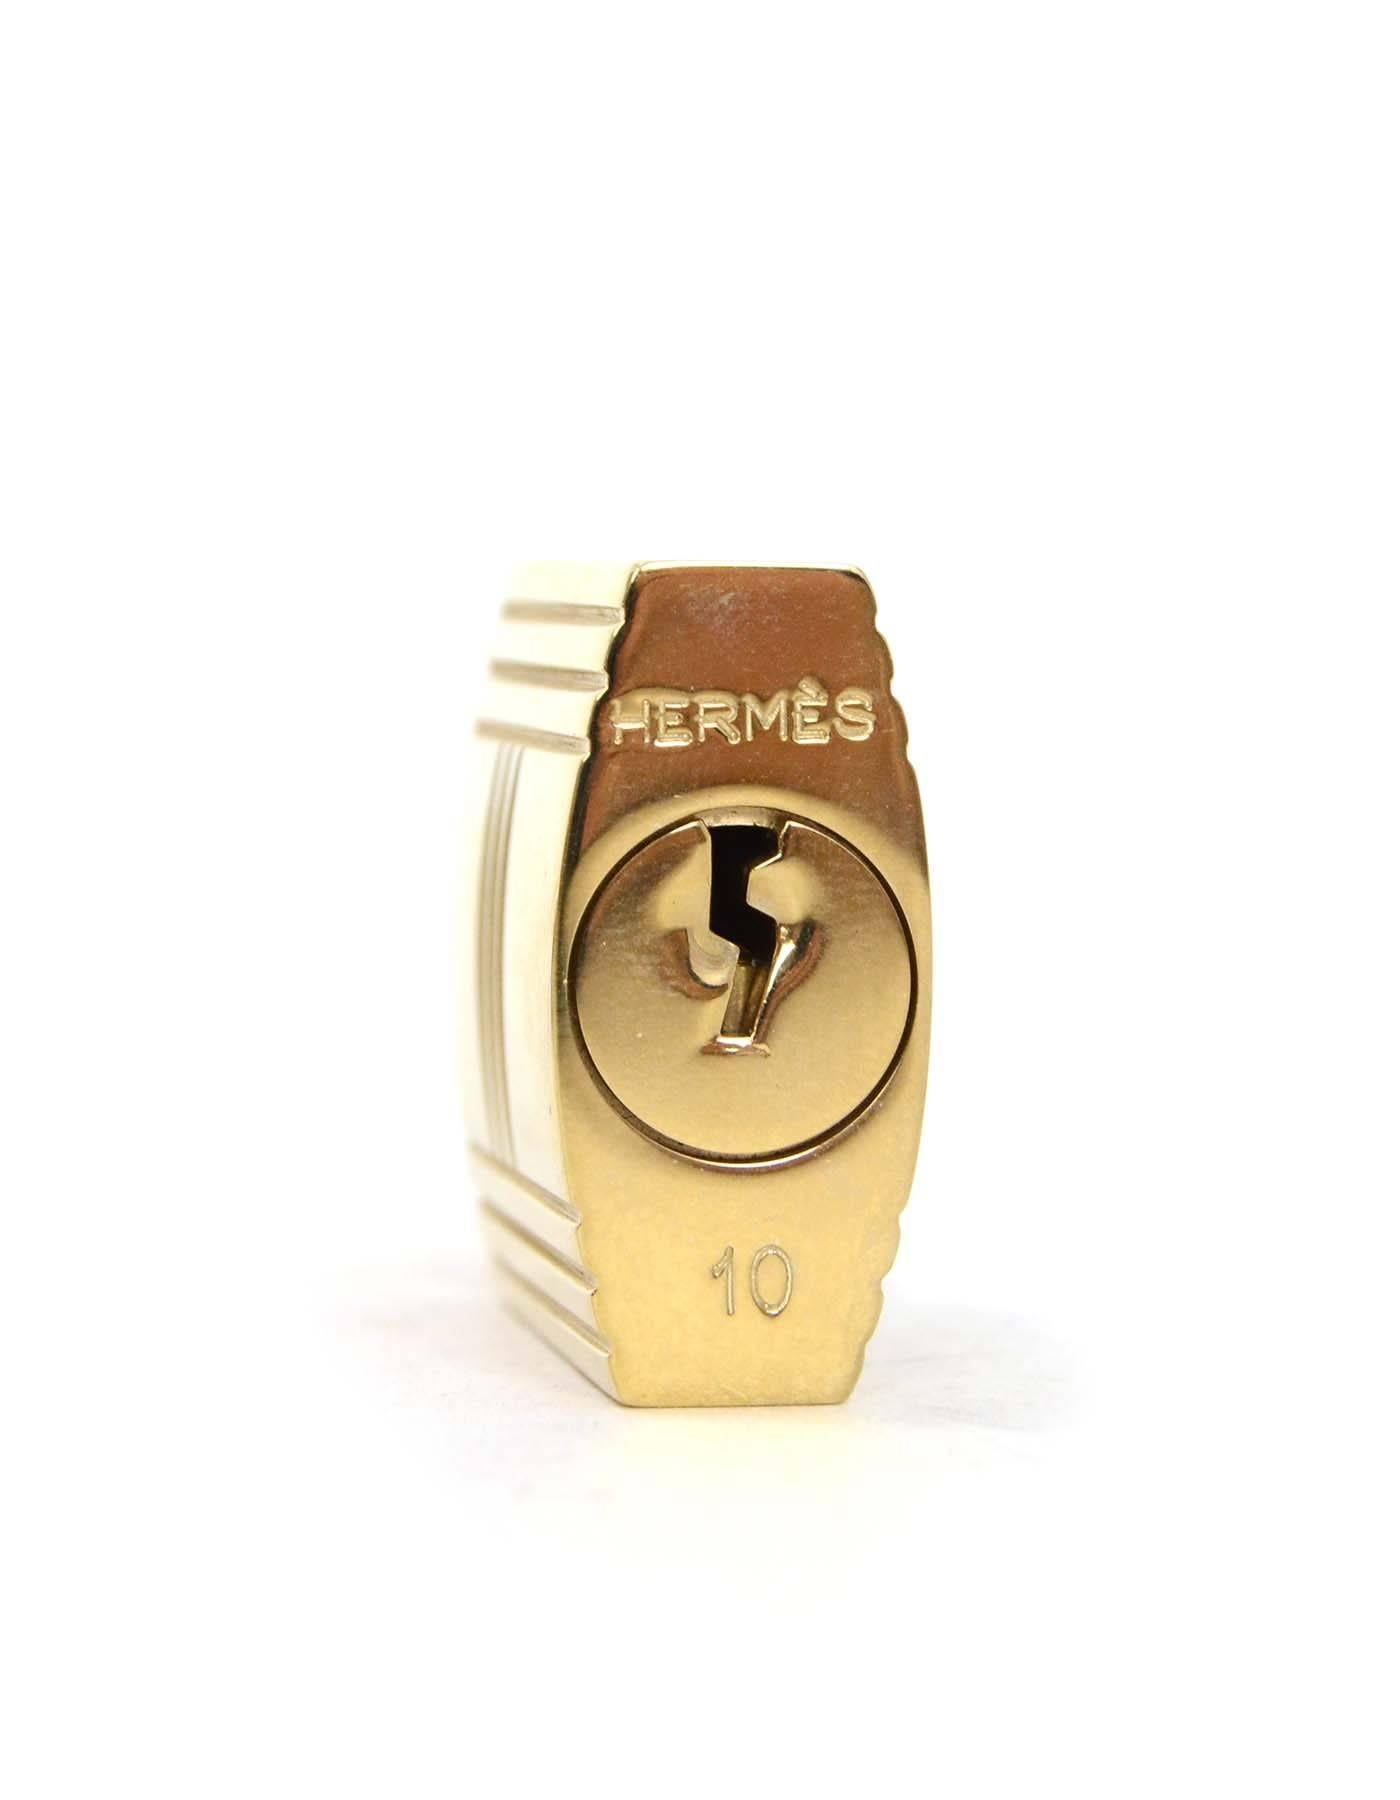 Hermes Large Gold Padlock & Keys
Color: Goldtone
Materials: Metal
Closure: Key lock
Stamp: Hermes 10
Overall Condition: Excellent 
Includes: Hermes pouch

Measurements: Padlock: 1.25